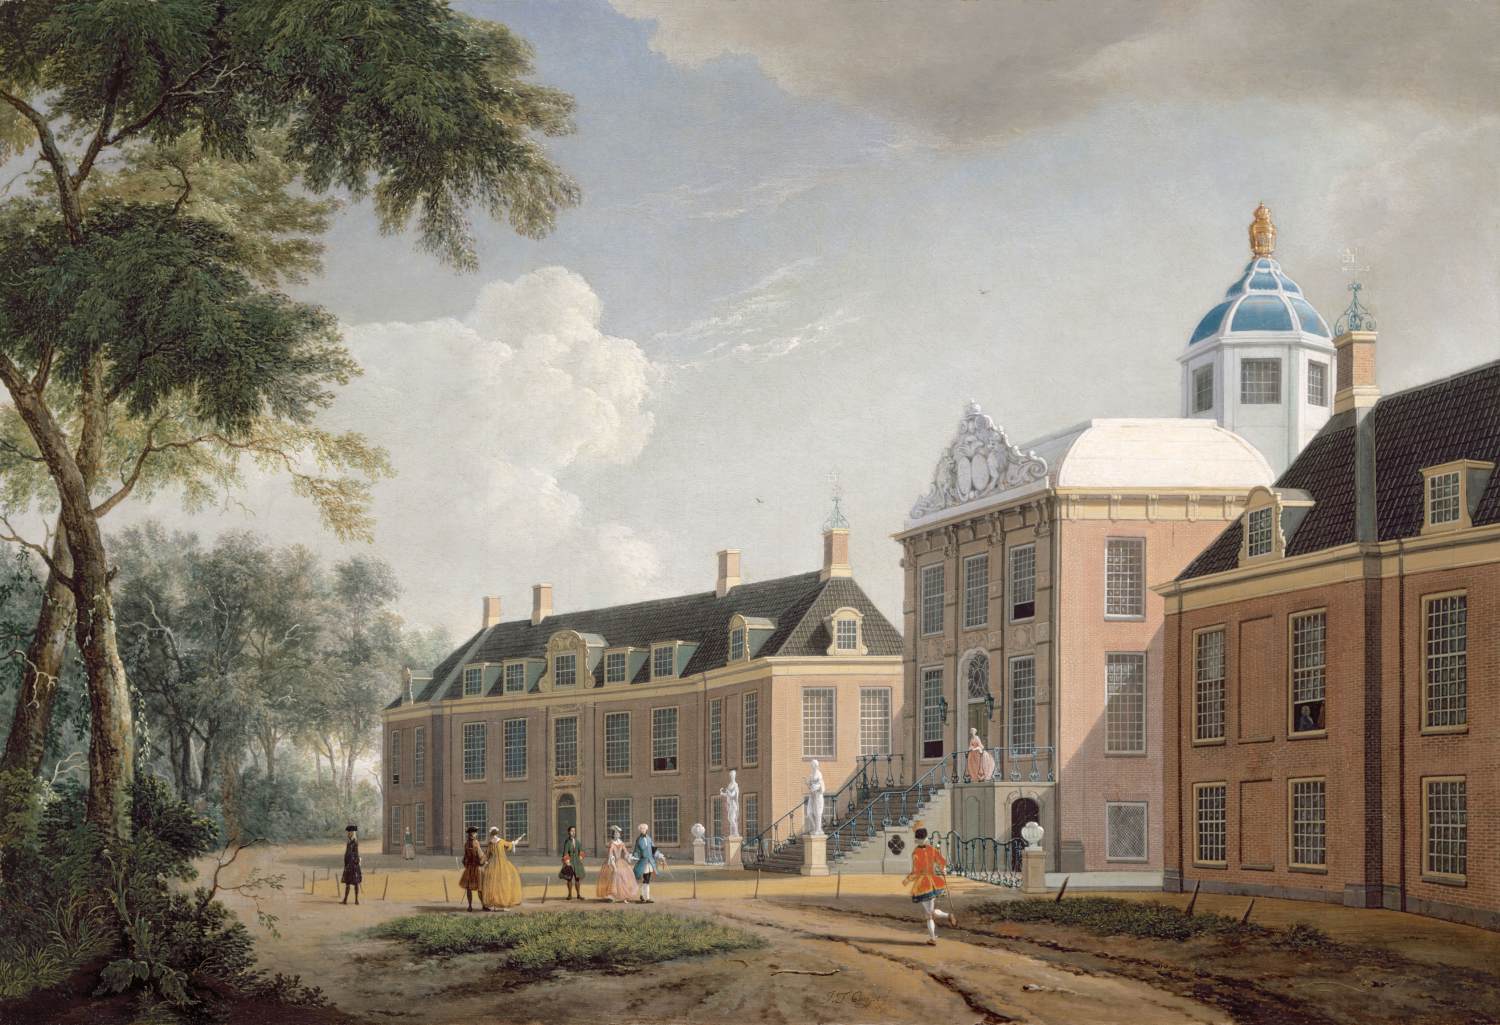 View of Huis Ten Bosch Palace